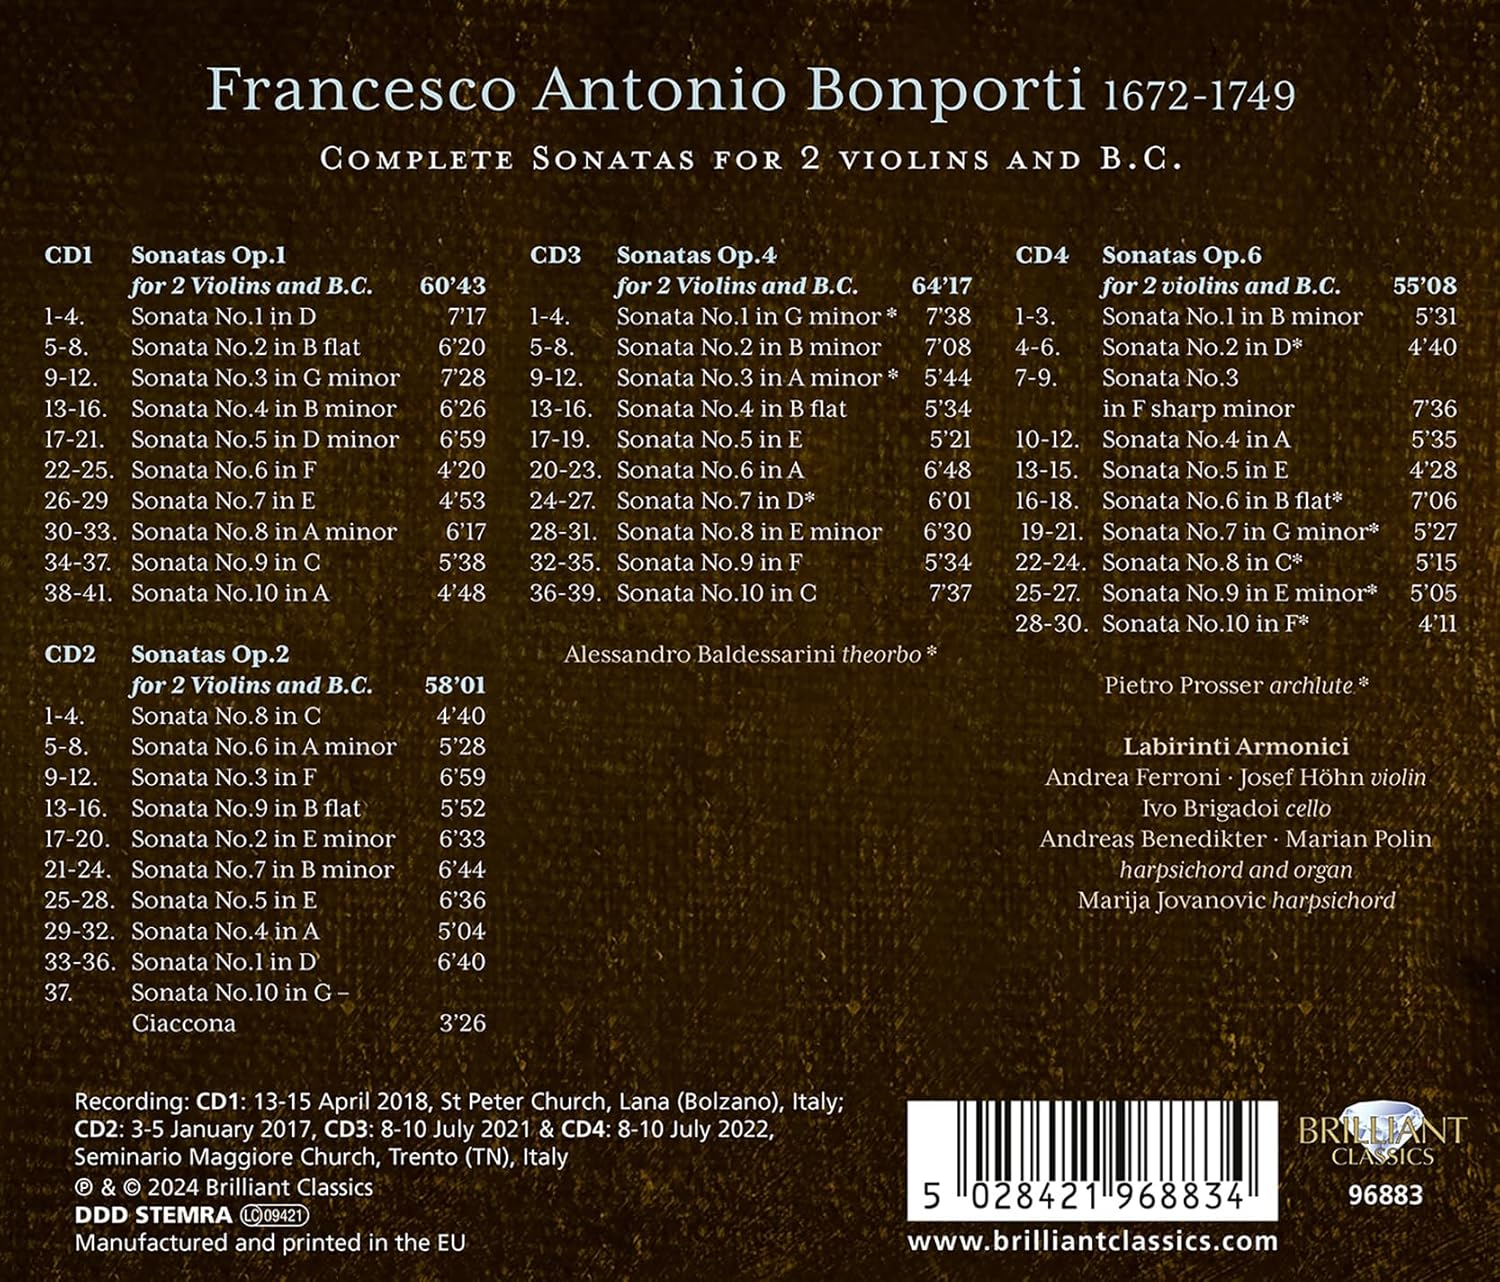 Labirinti Armonici 본포르티: 두 대의 바이올린과 바소 콘티누오를 위한 소나타 전곡 (Bonporti: Complete Sonatas For 2 Violins And B.C.)